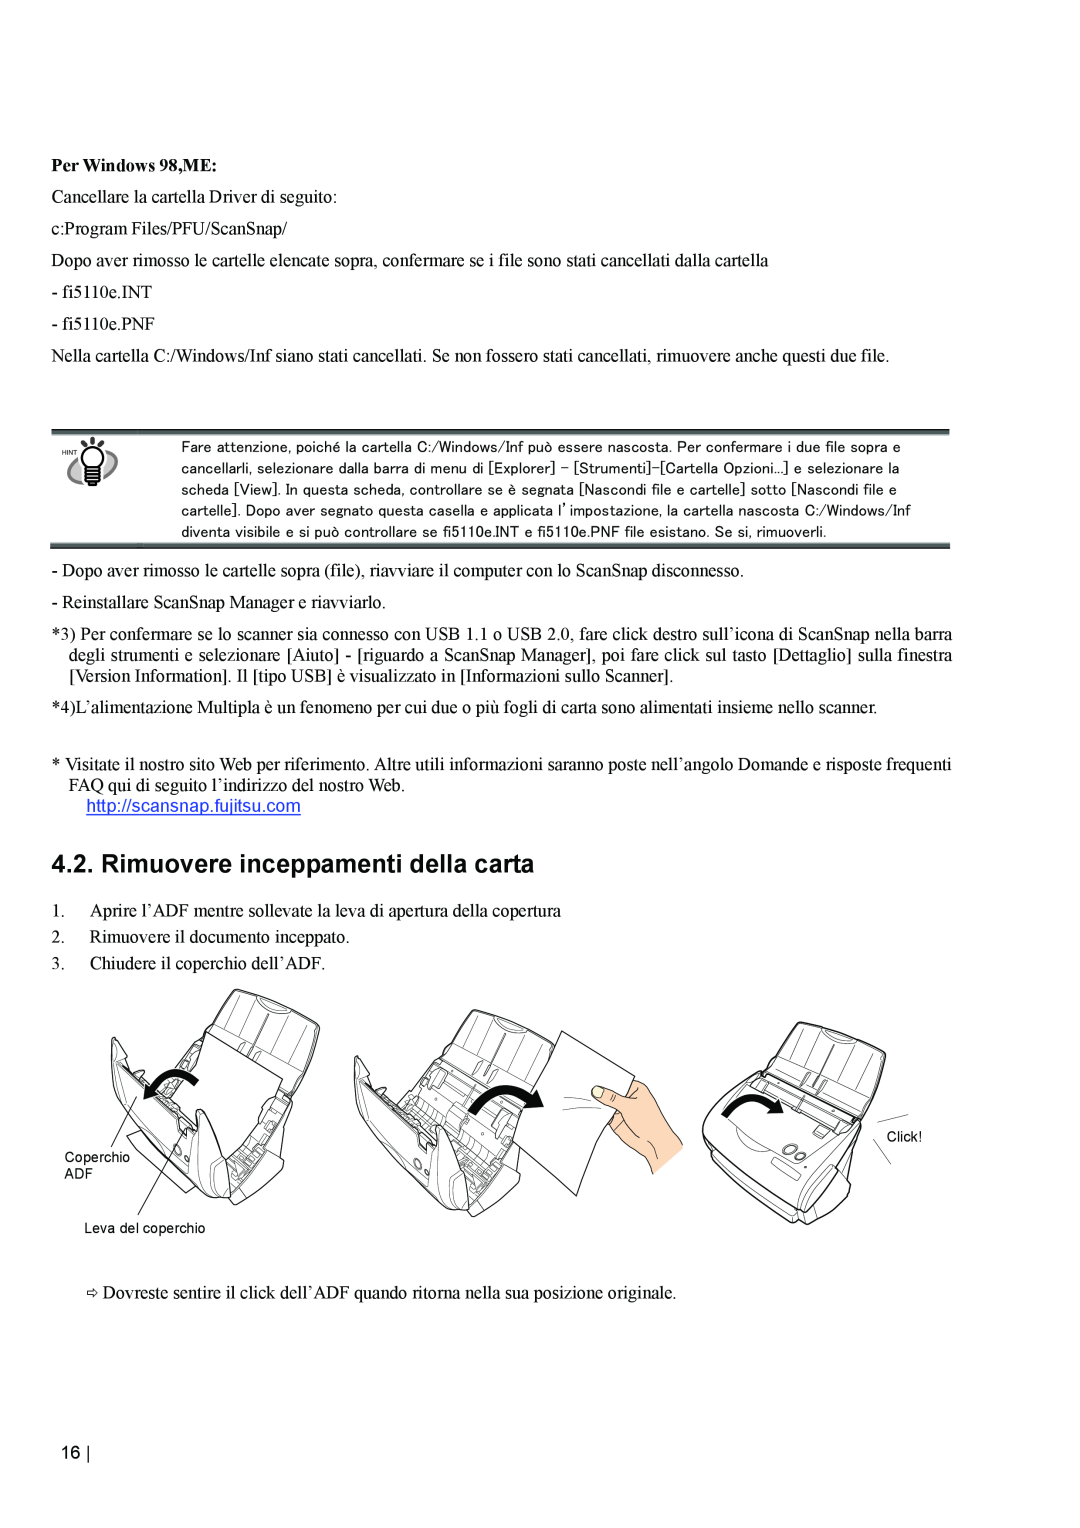 Fujitsu fi-5110EOX2 manual Rimuovere inceppamenti della carta, Per Windows 98,ME, http//scansnap.fujitsu.com 